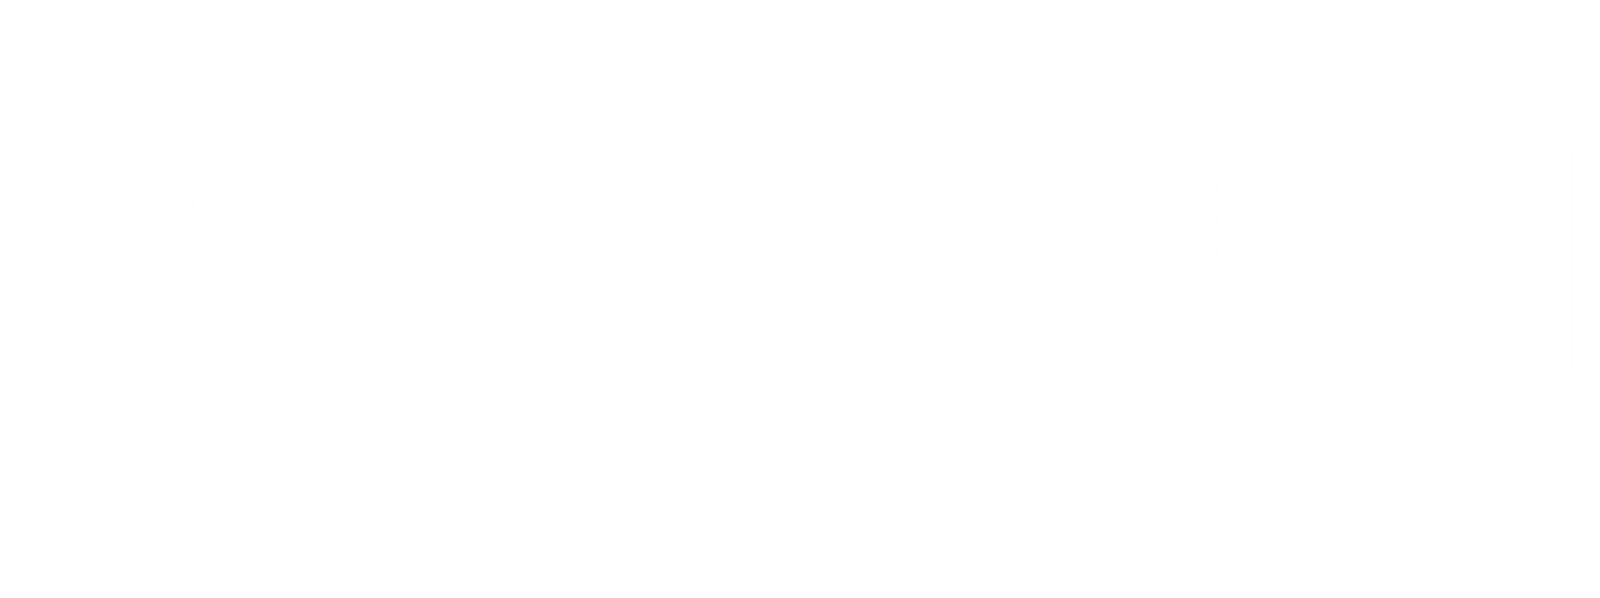 winbox logo white